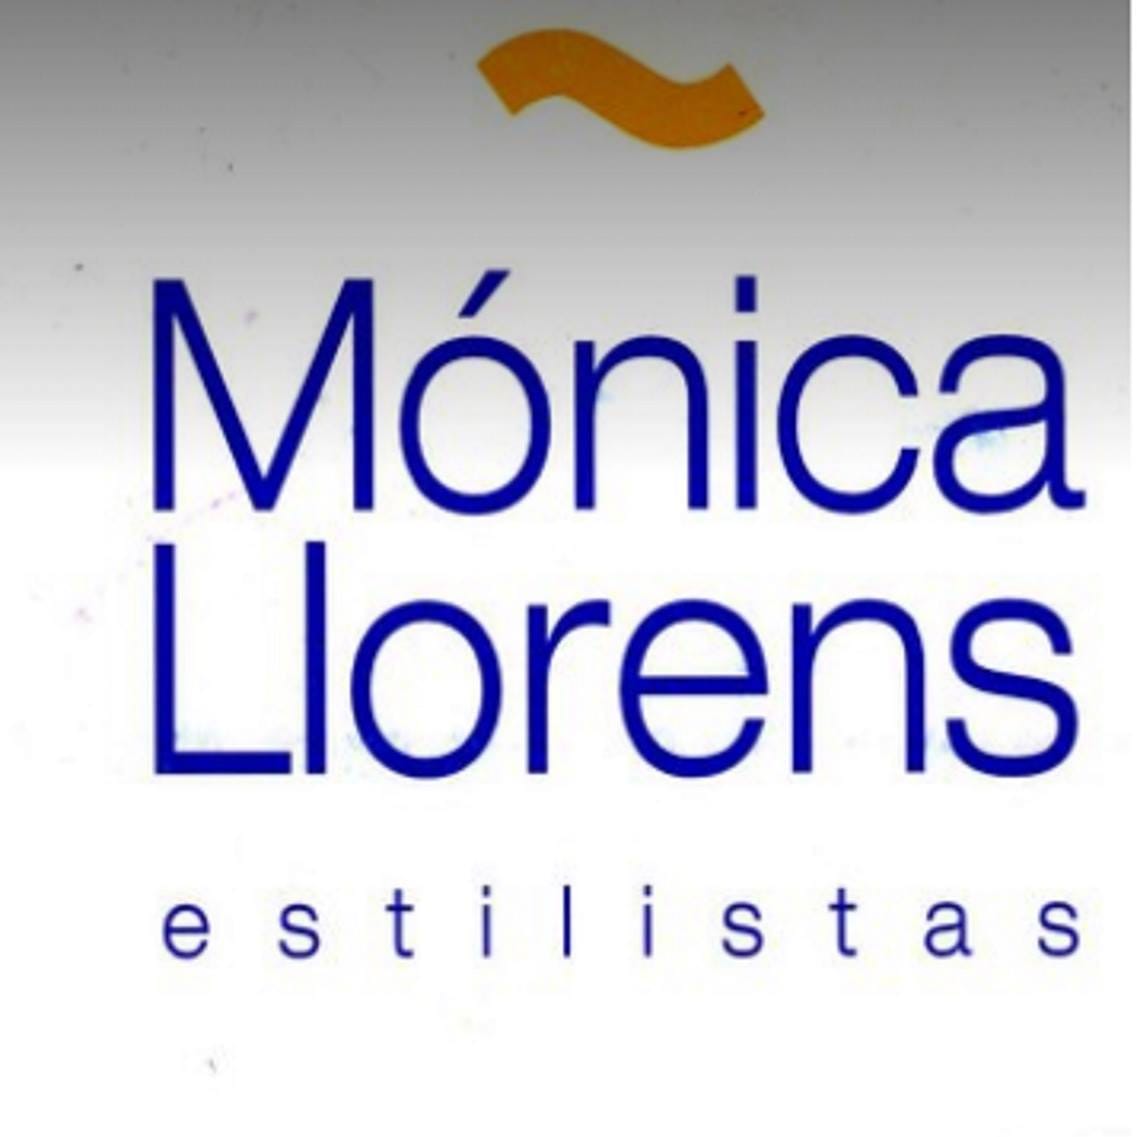 Mónica Llorens Estilista